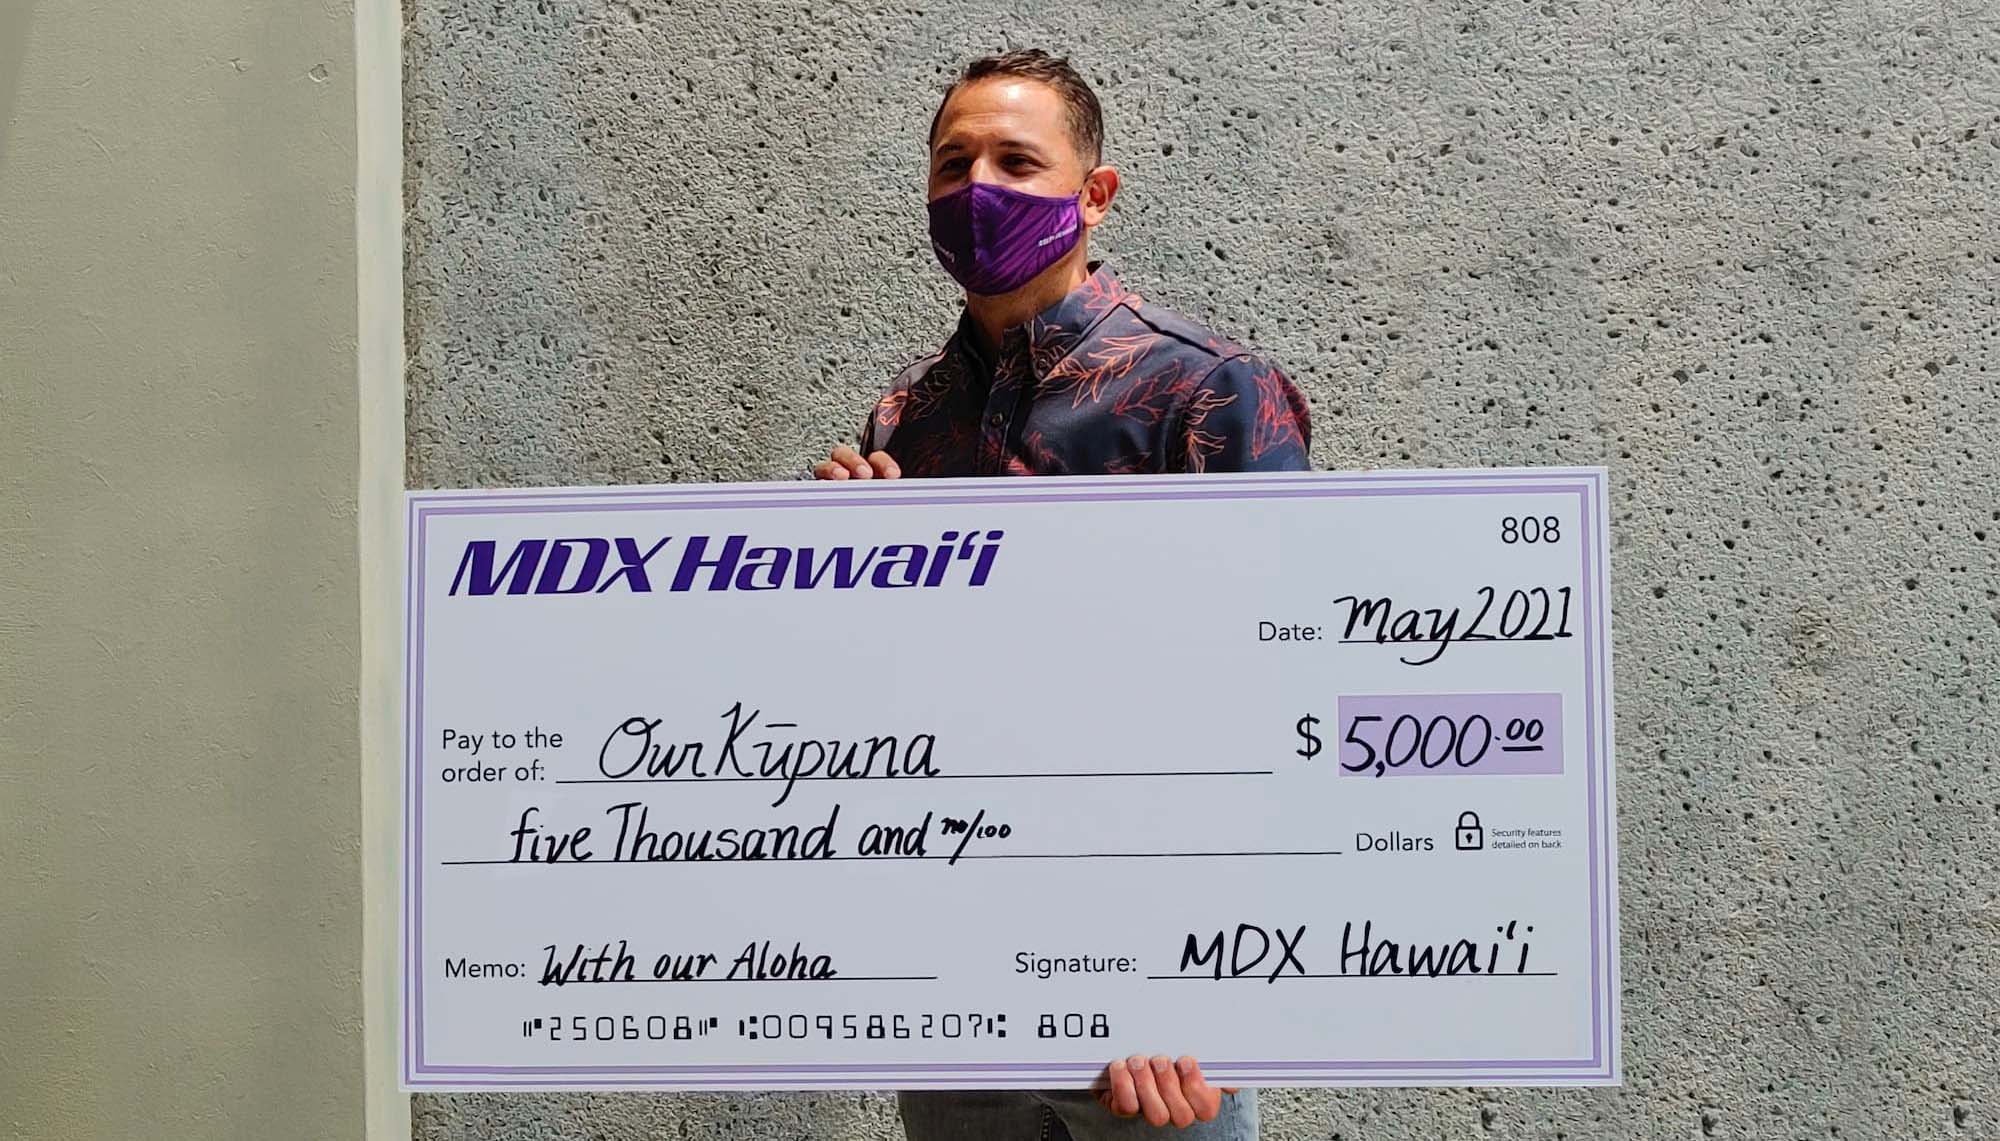 MDX Hawaii award for $5,000